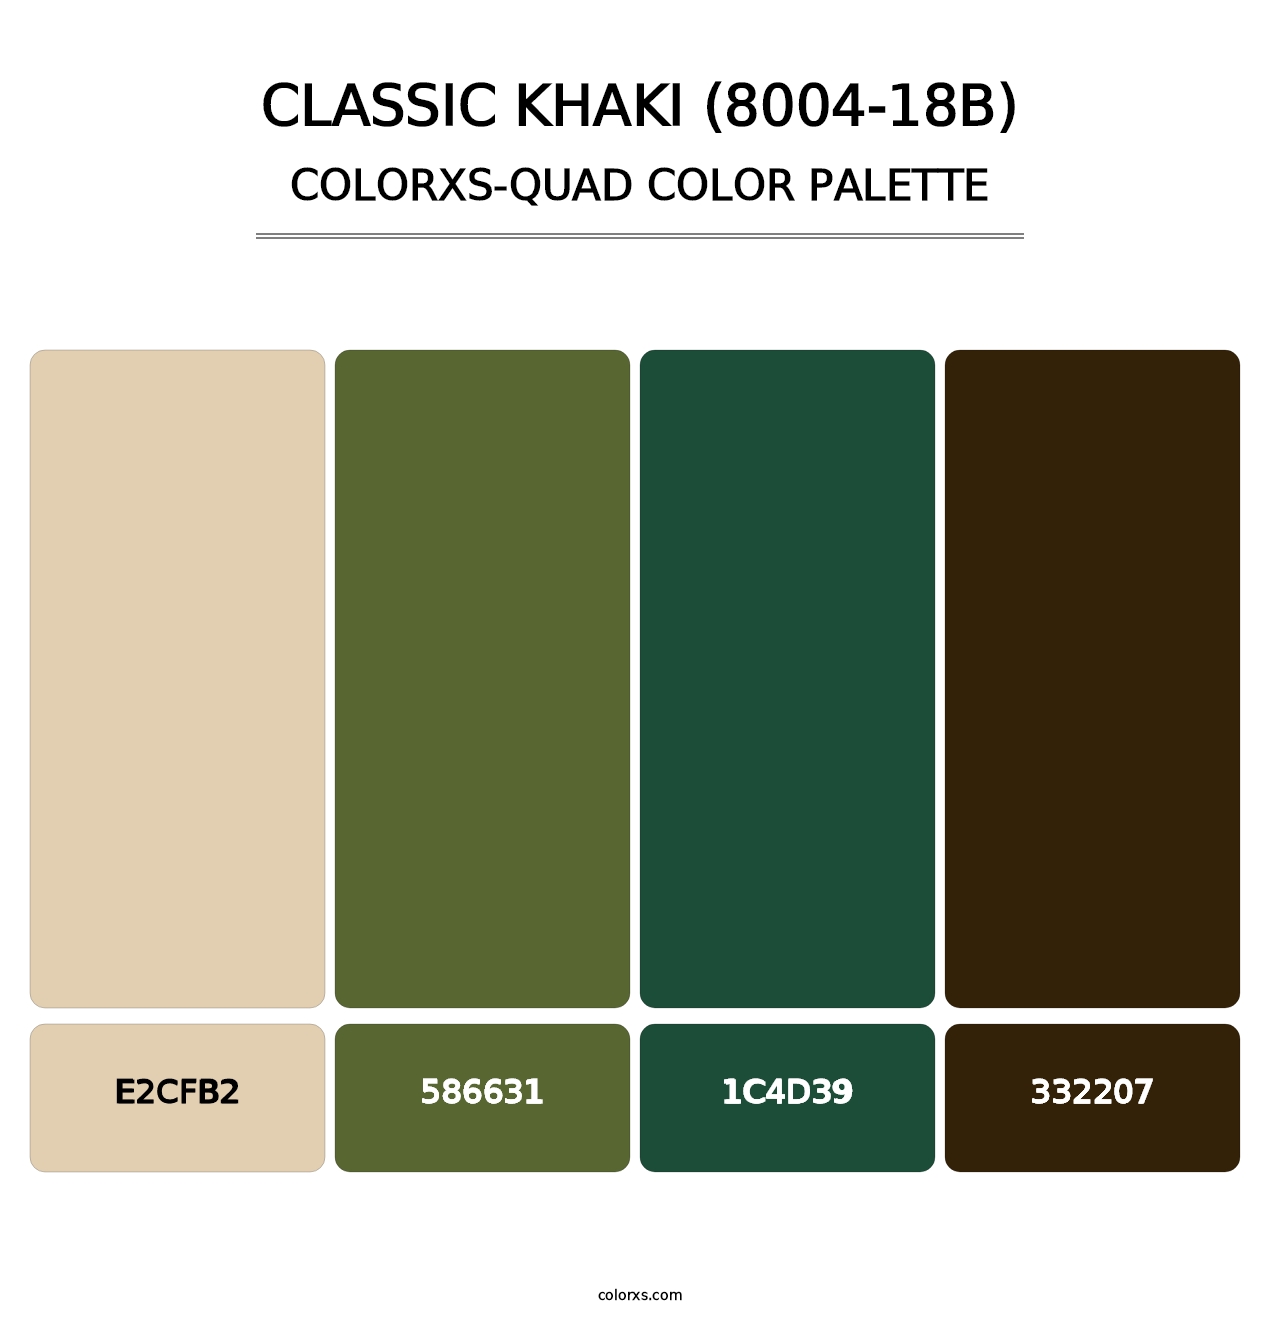 Classic Khaki (8004-18B) - Colorxs Quad Palette